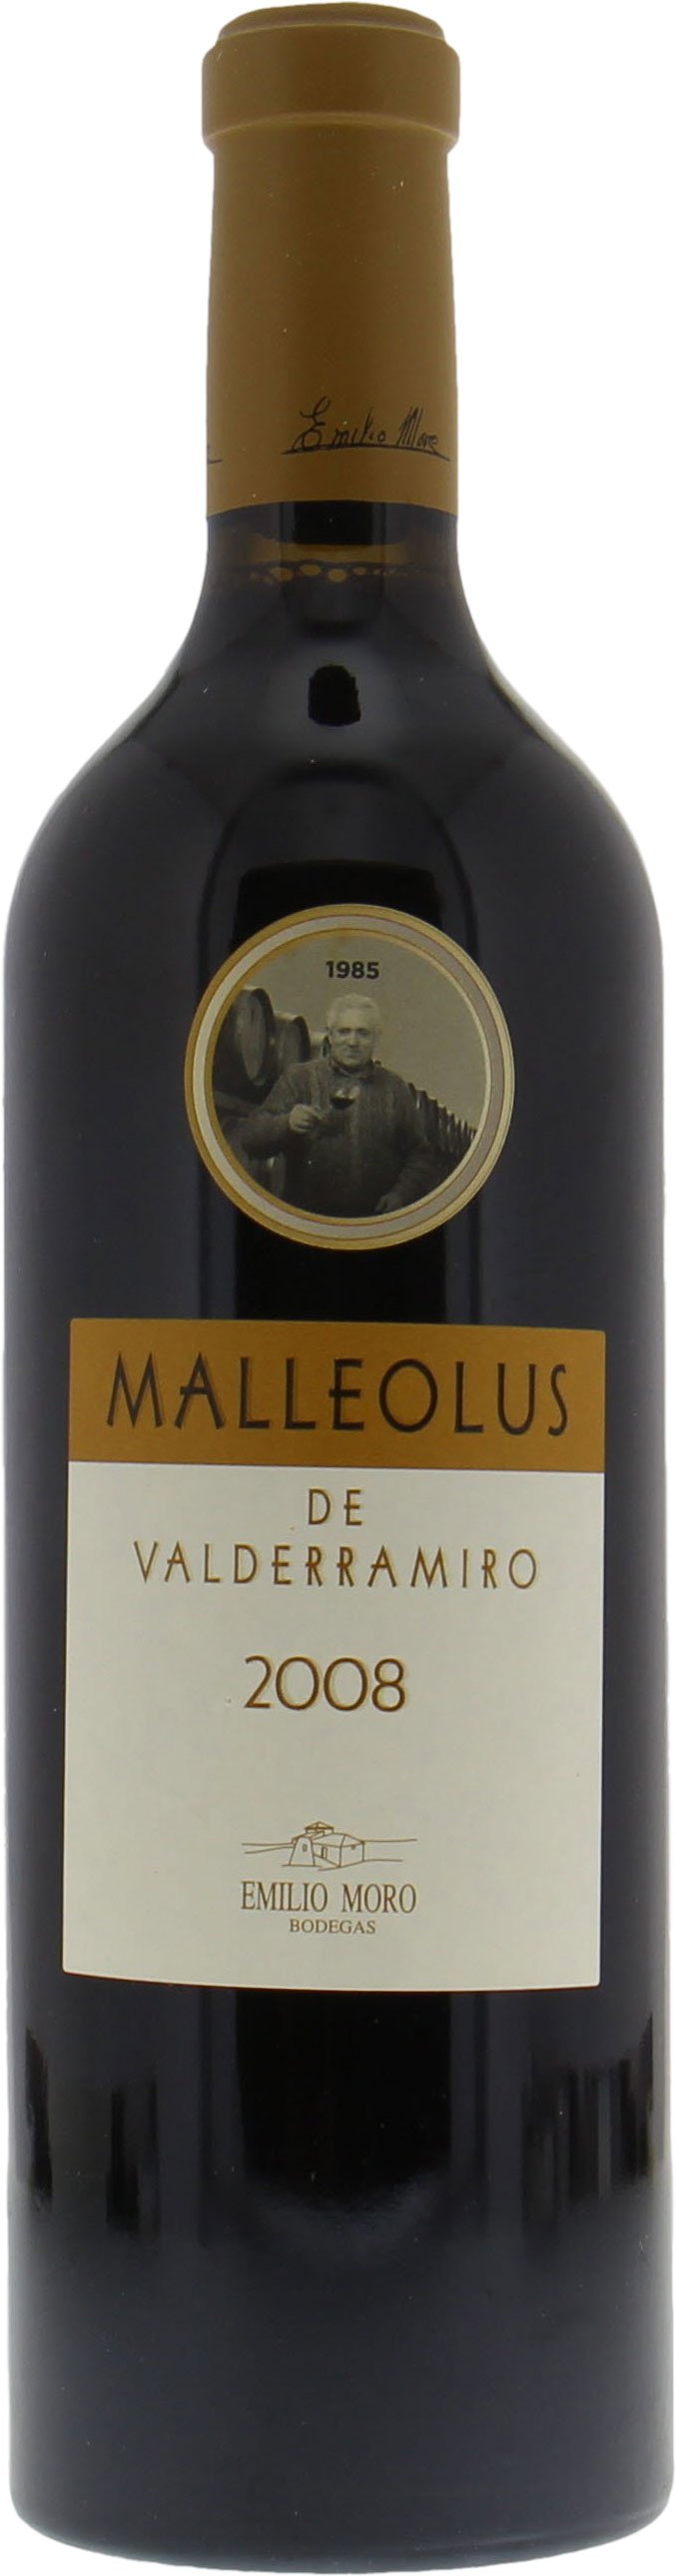 Bodegas Emilio Moro - Malleolus de Valderramiro 2008